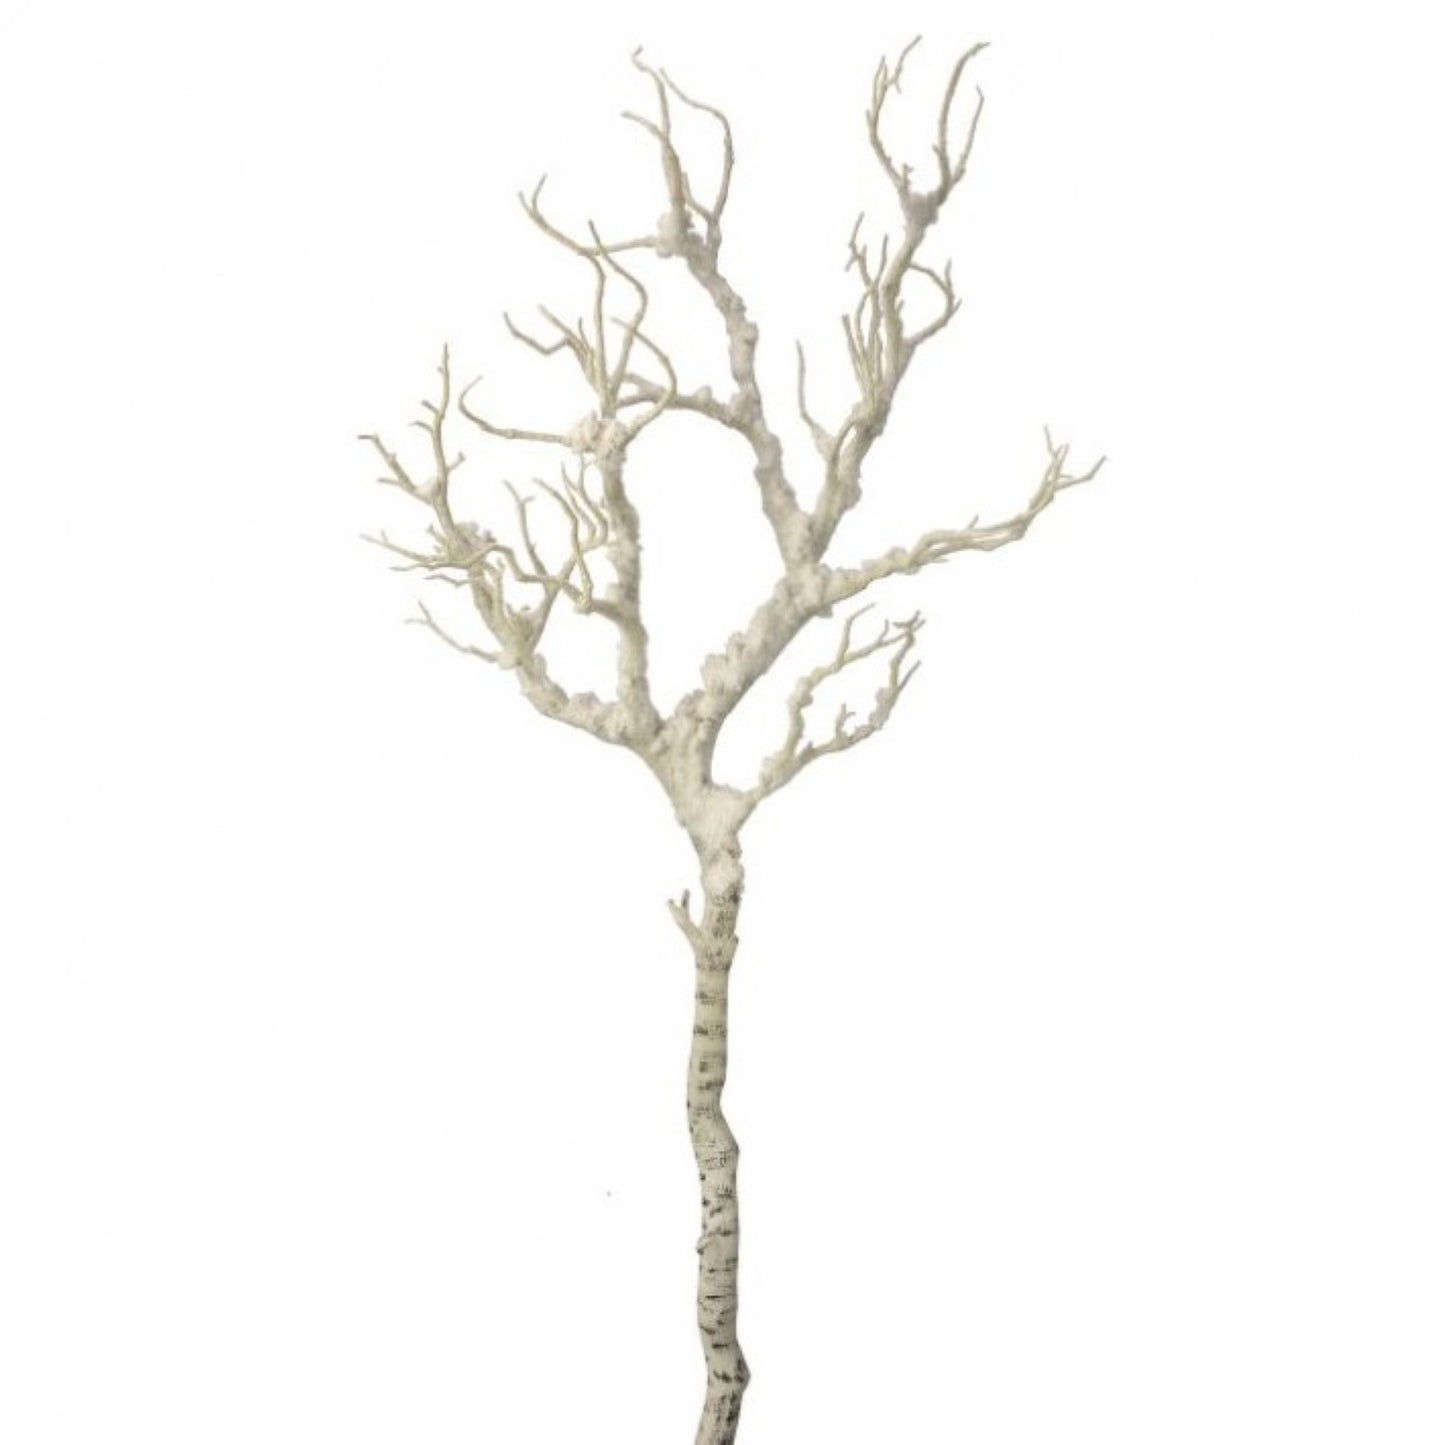 Regency International 35" Plastic Snow Tree Branch